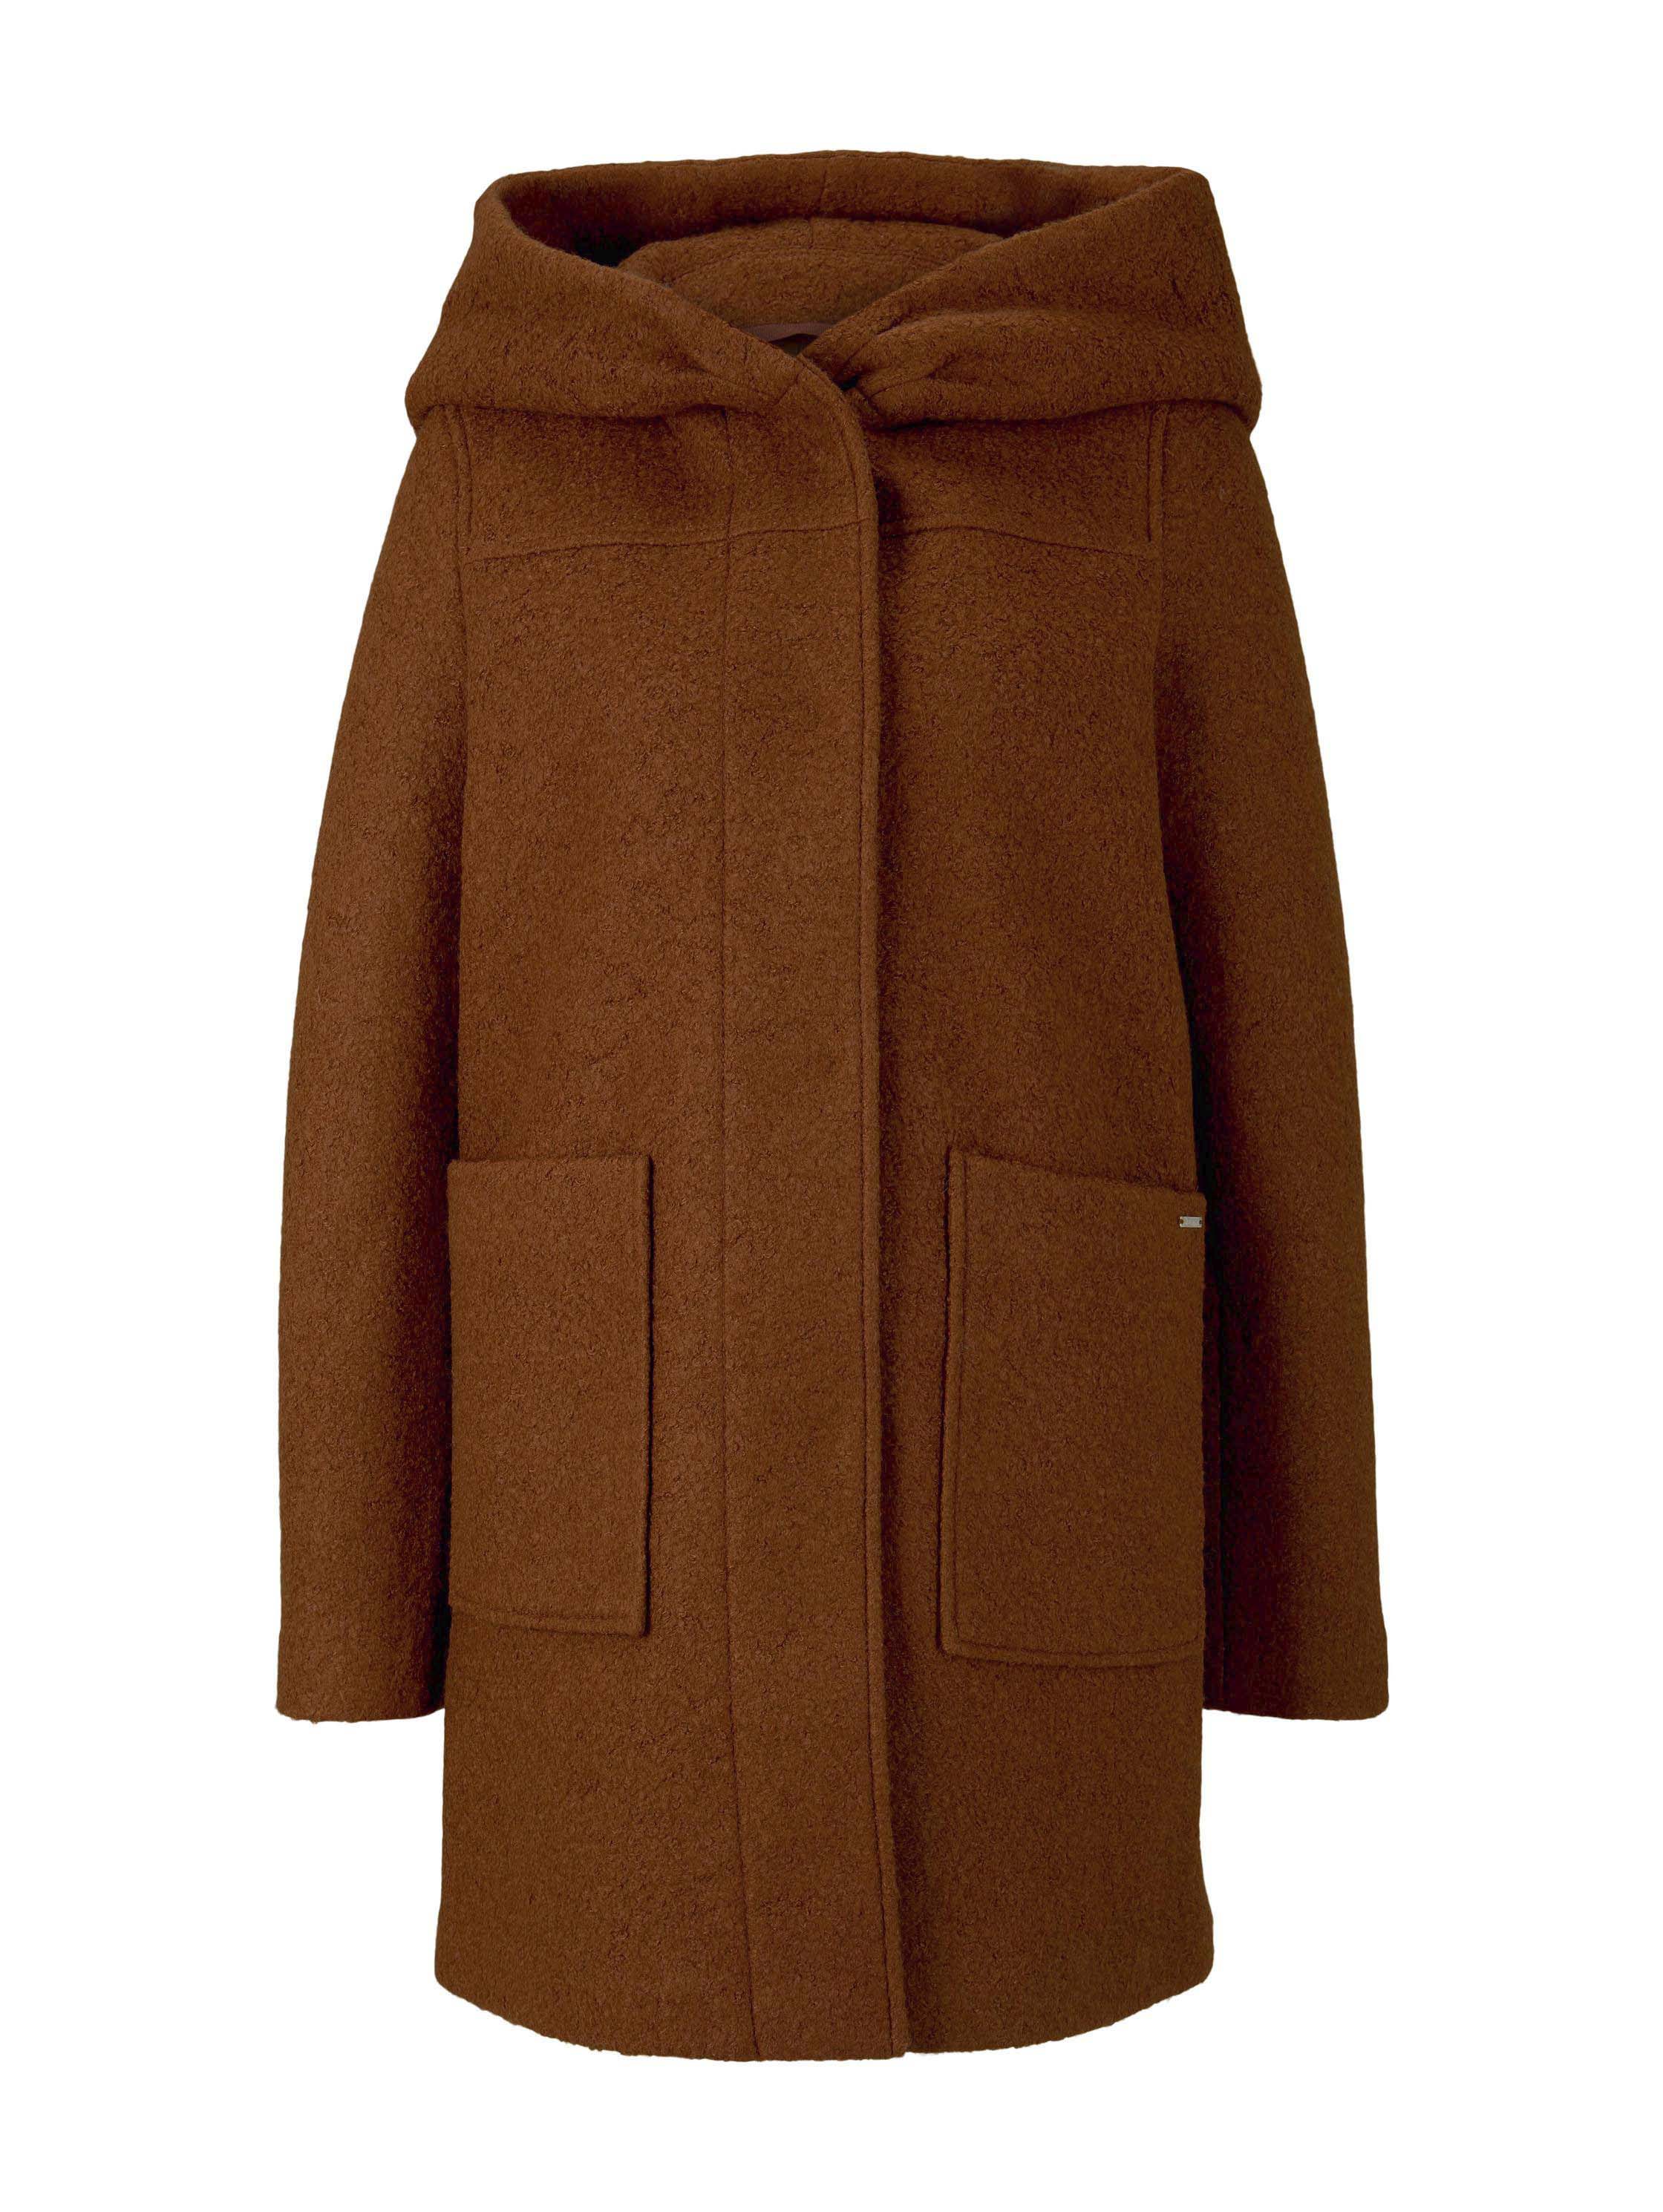 boucle wool coat with hood, burnt hazelnut brown